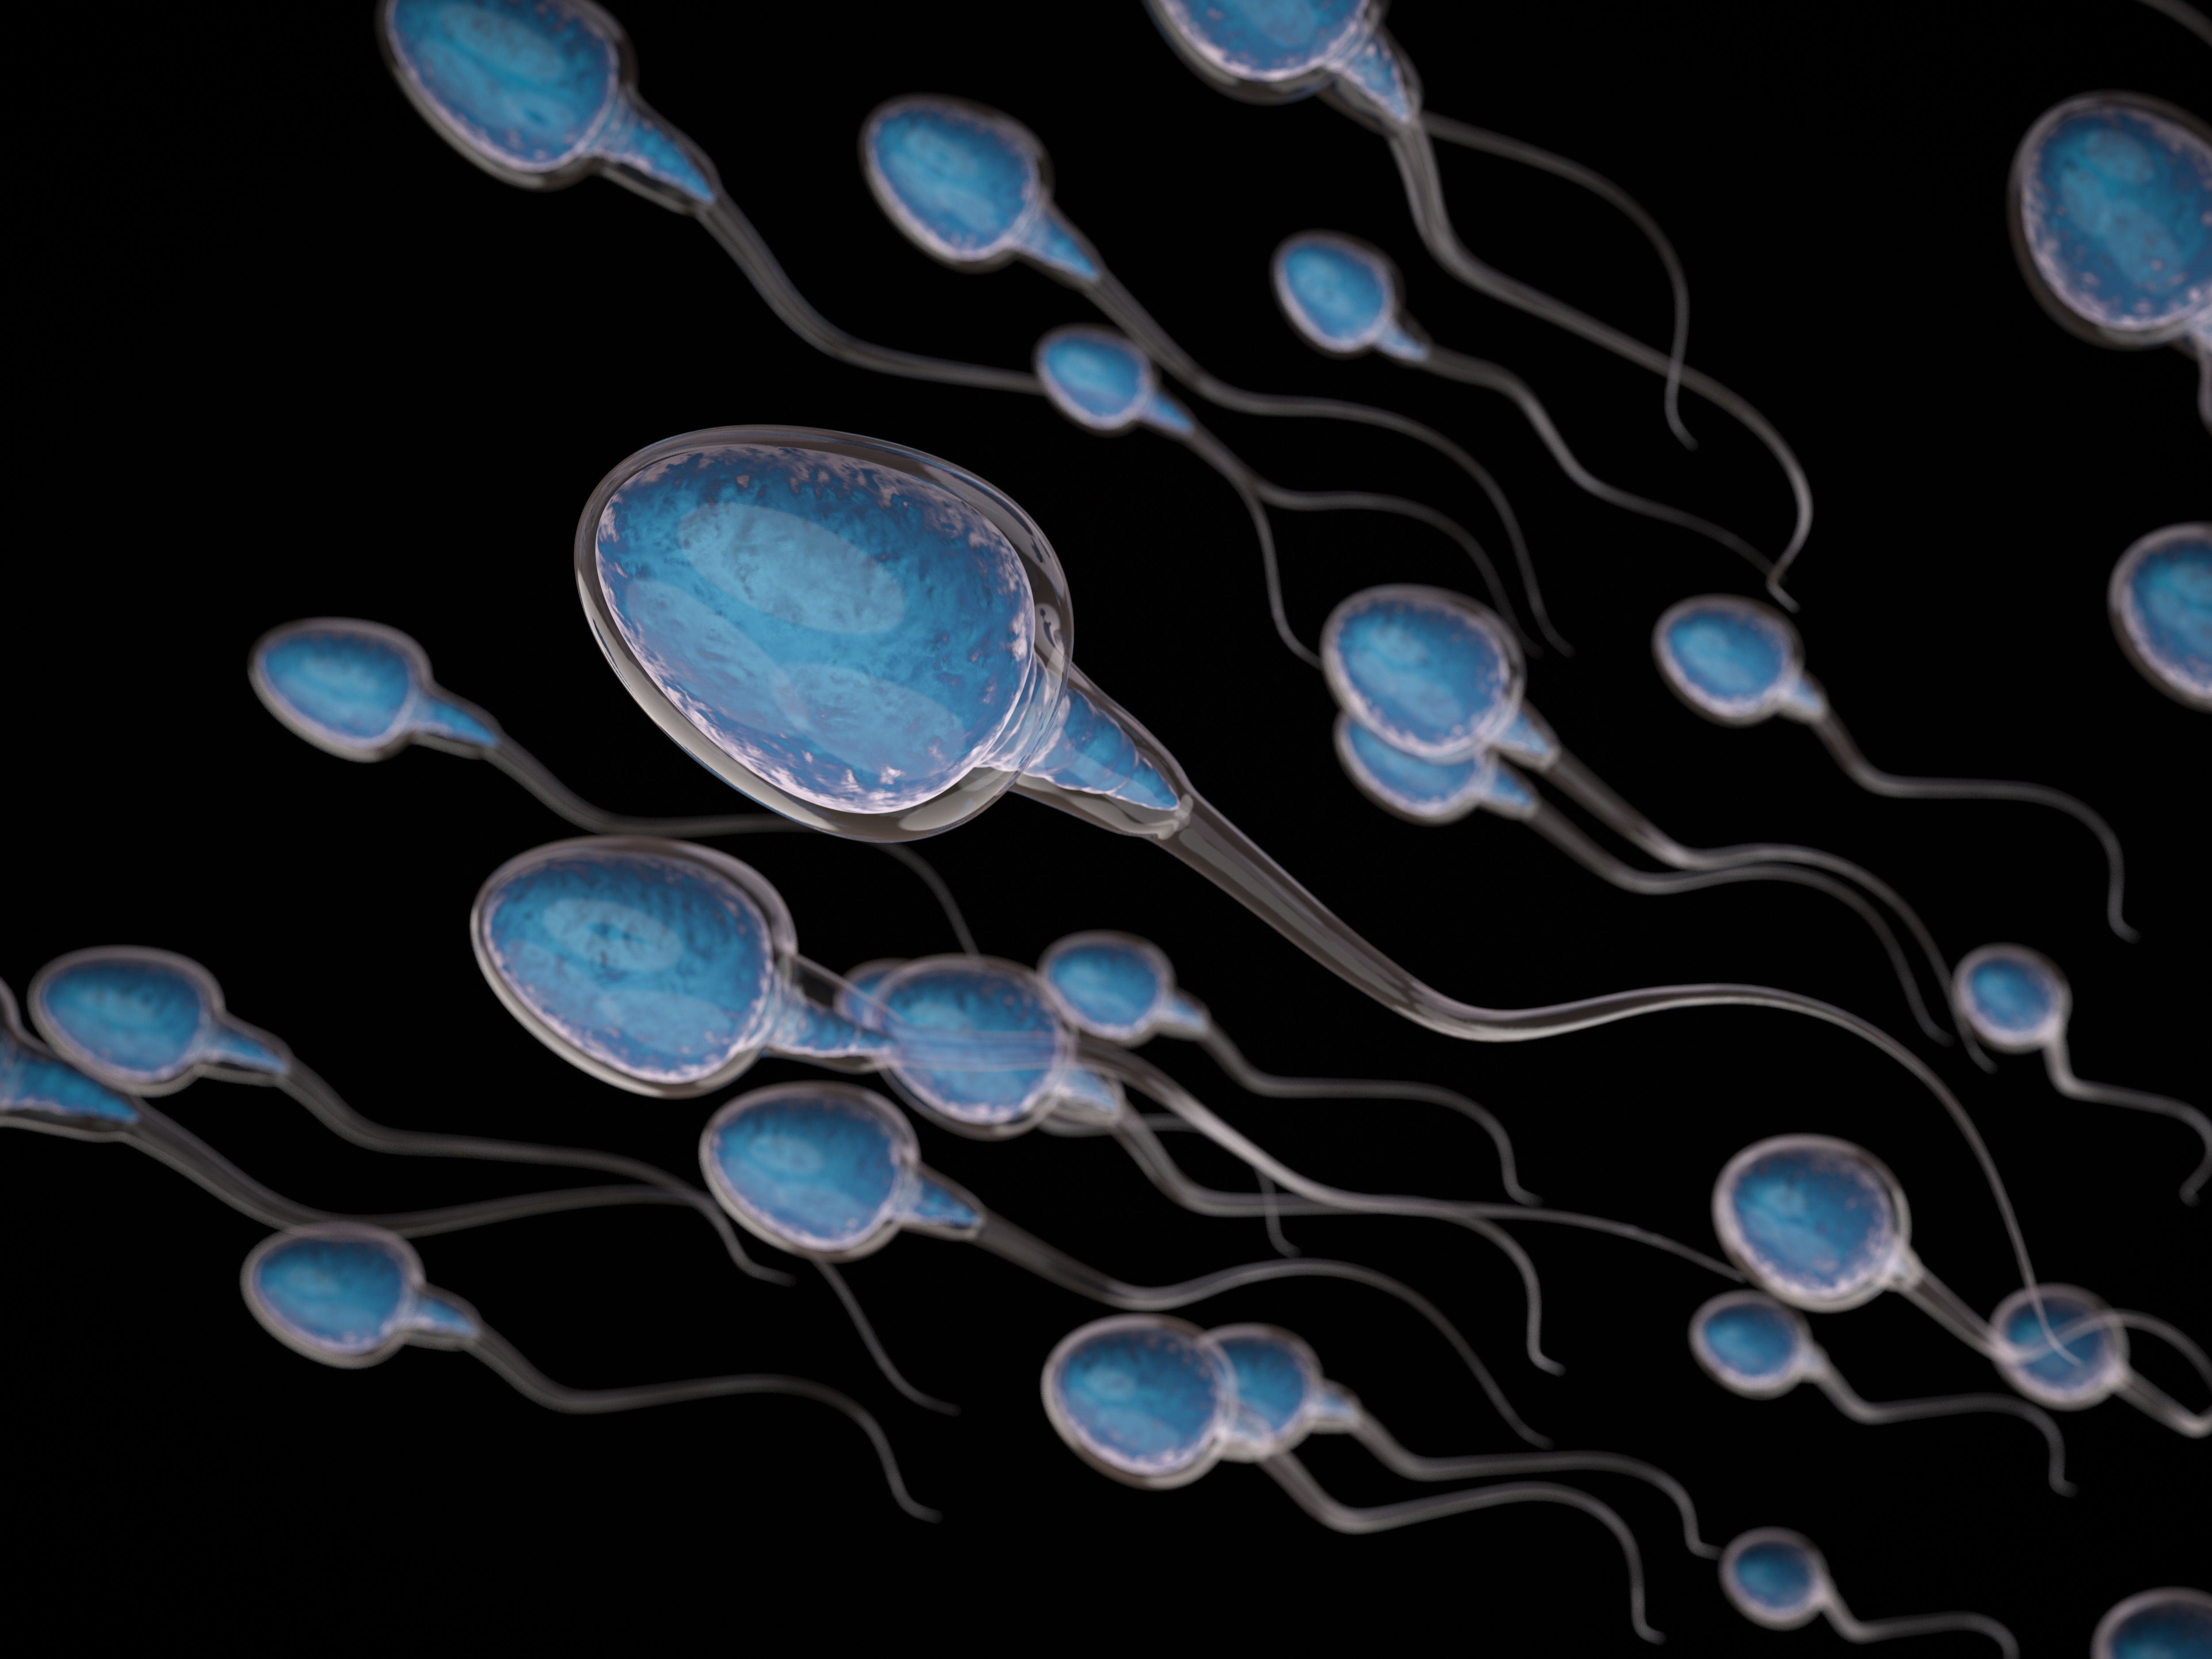 Sperm studies ucla